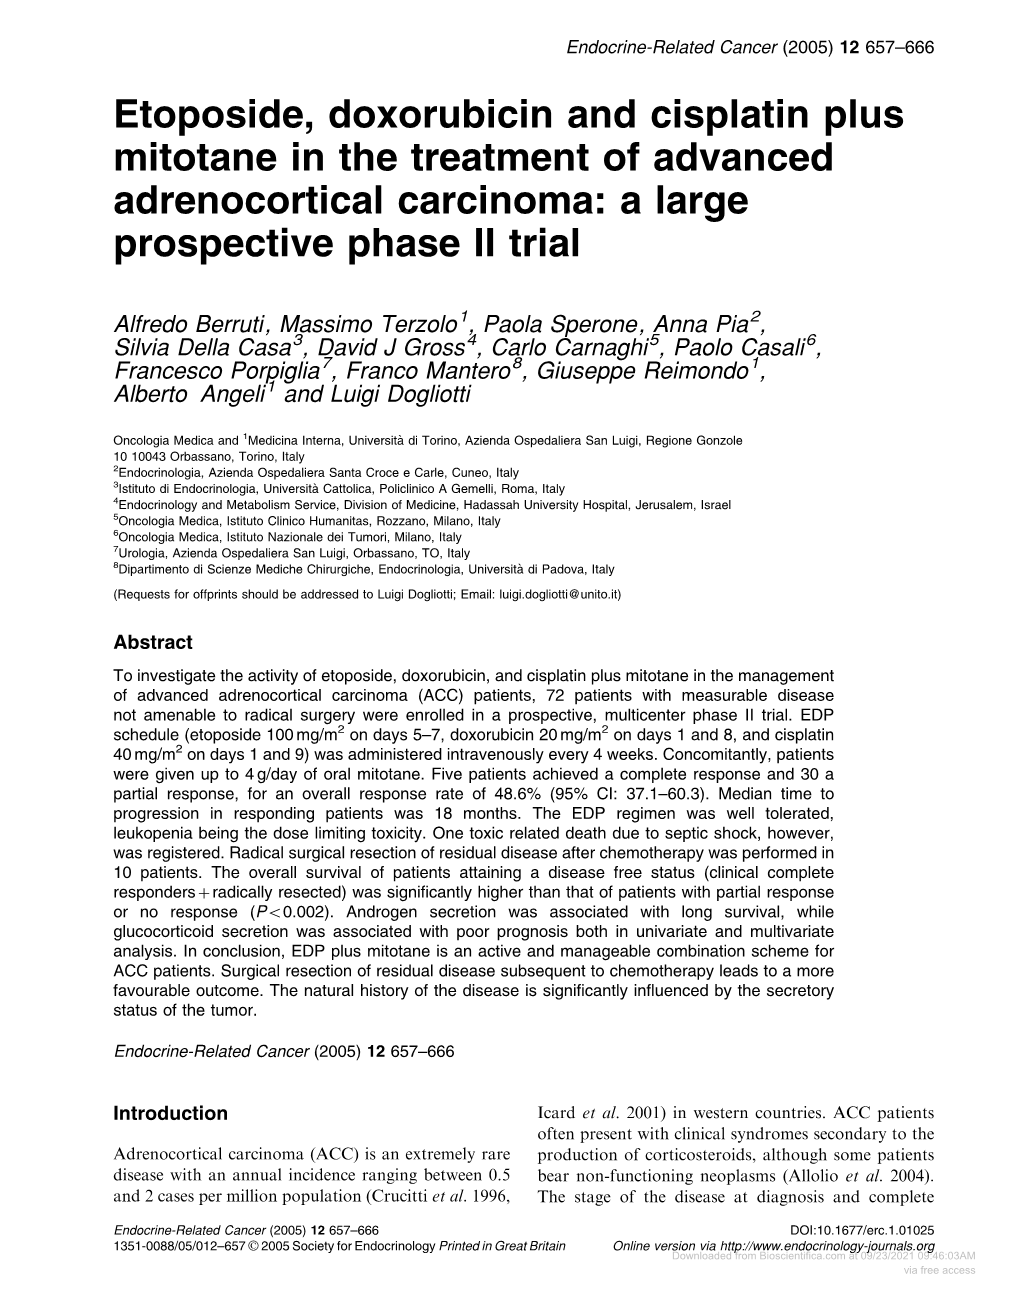 Etoposide, Doxorubicin and Cisplatin Plus Mitotane in the Treatment of Advanced Adrenocortical Carcinoma: a Large Prospective Phase II Trial